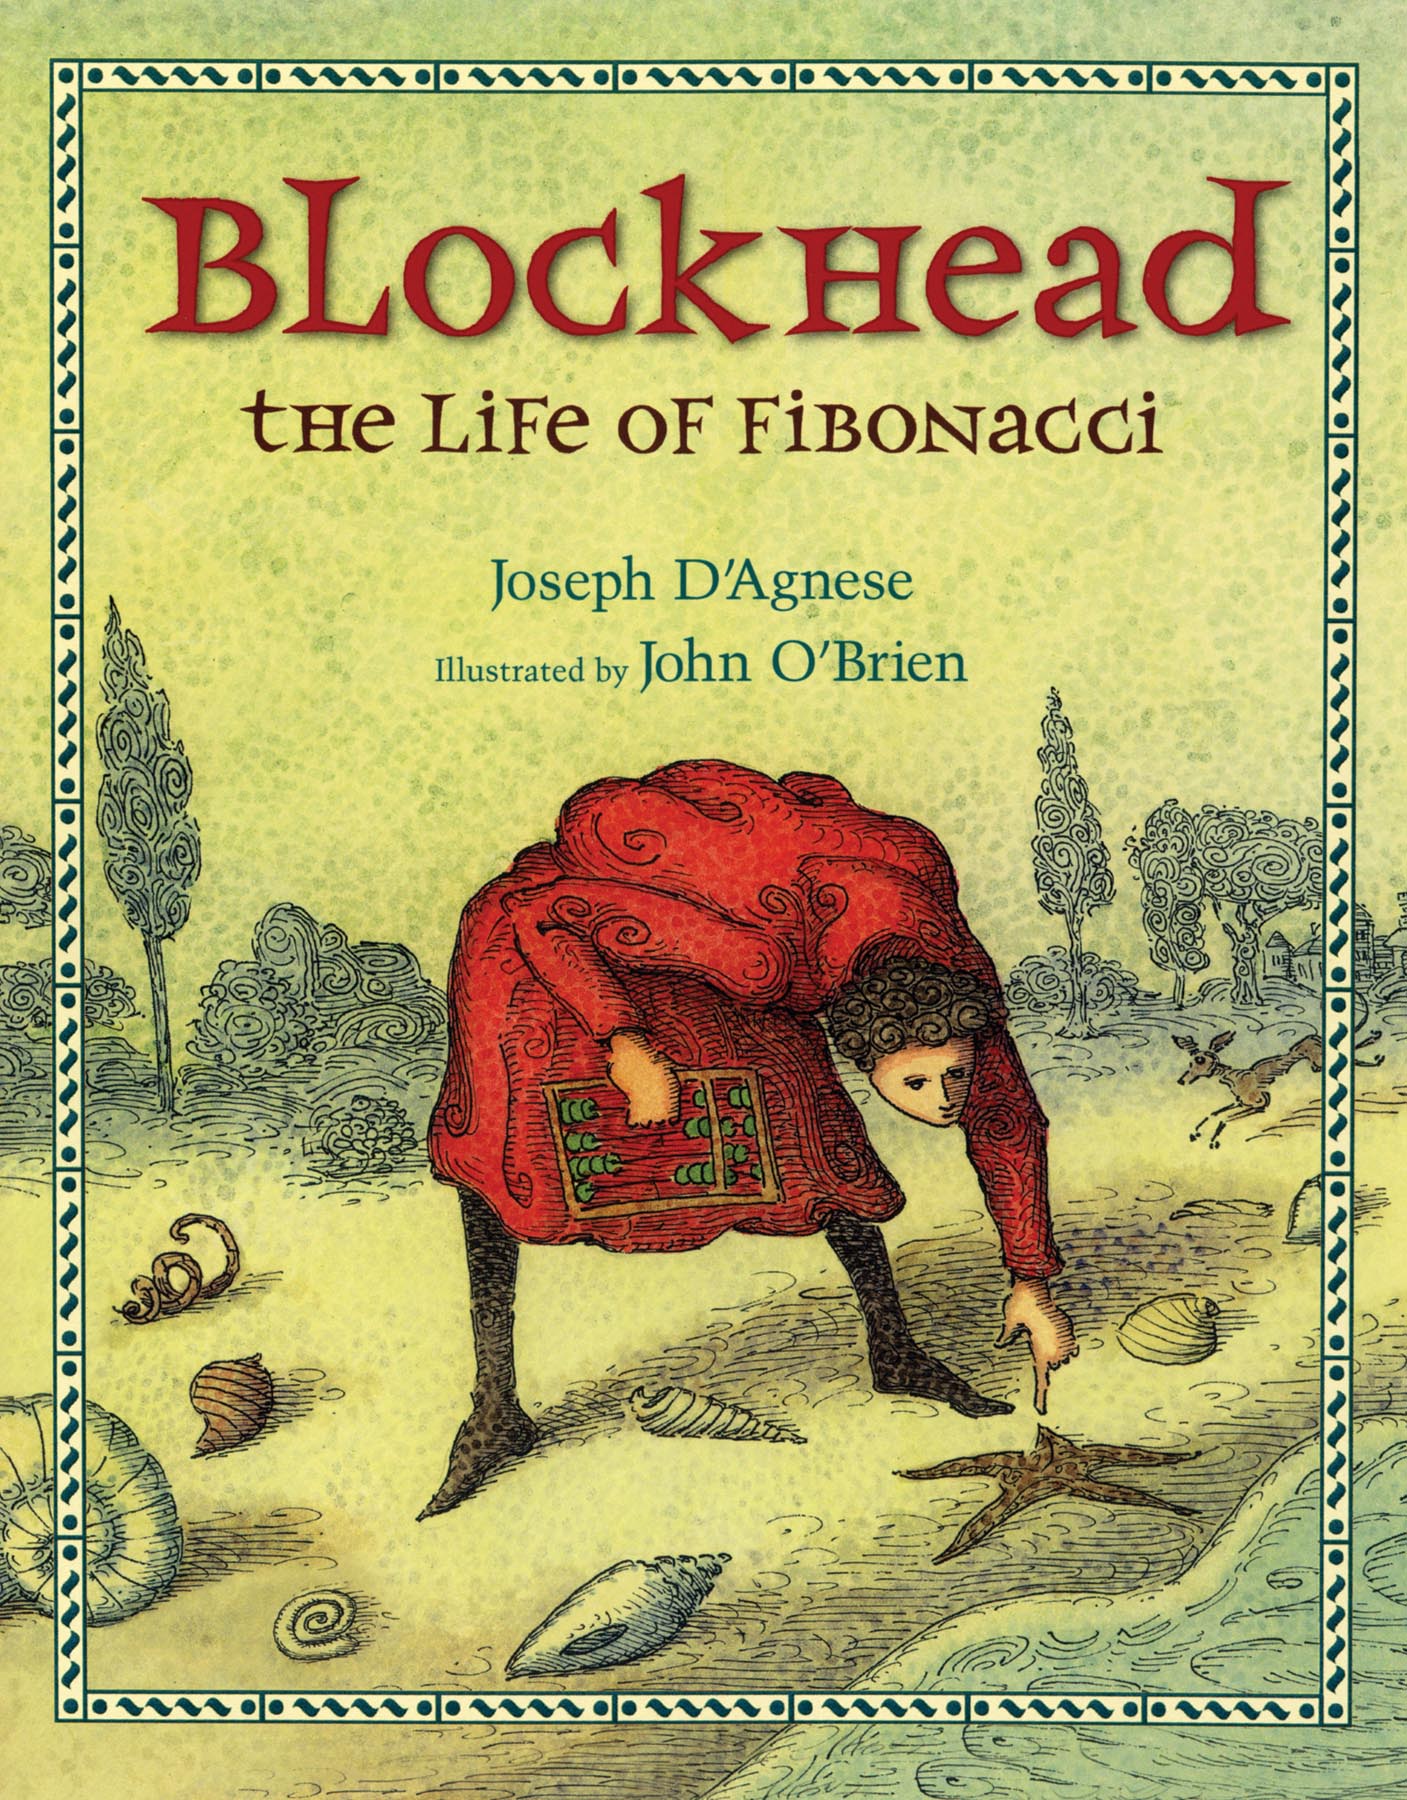 Blockhead: The Life of Fibonacci by Joseph D'Agnese